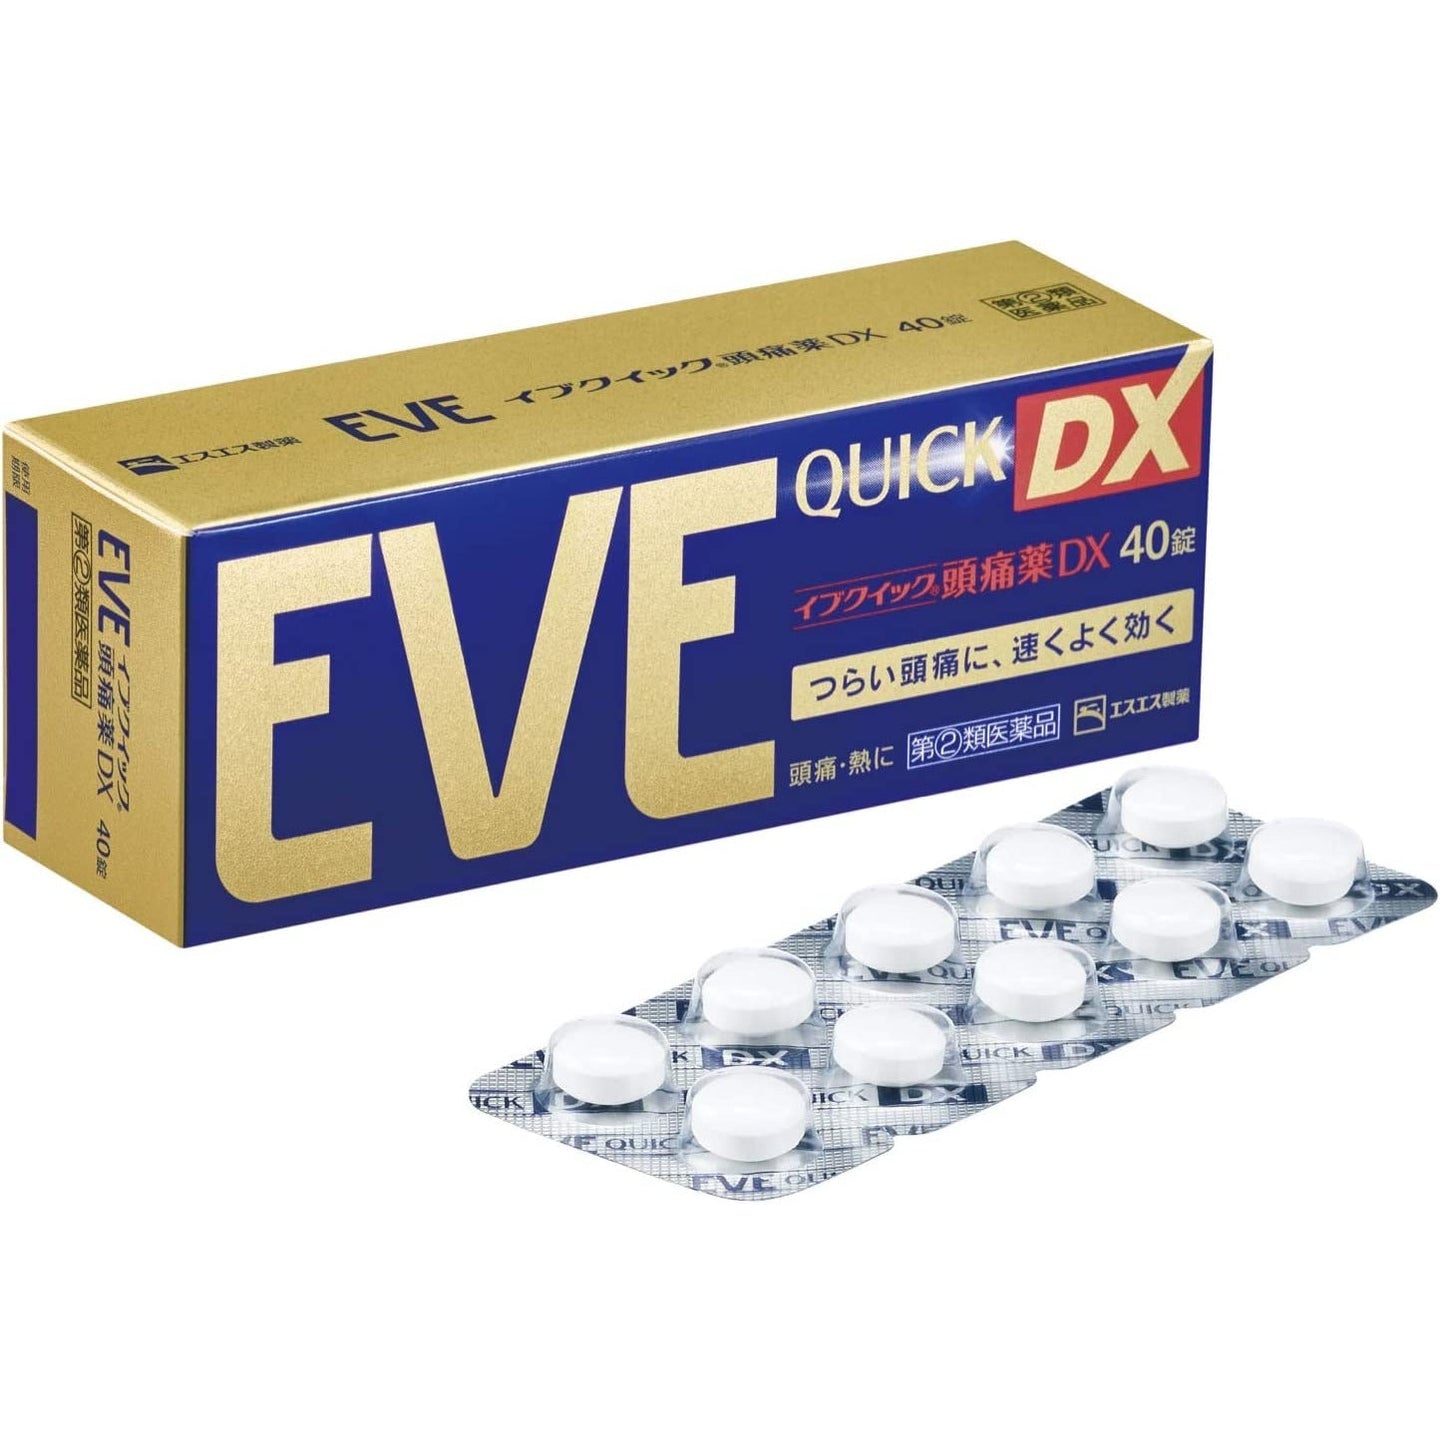 SS製藥 白兔牌 EVE QUICK DX 速效頭痛藥 金色加強版